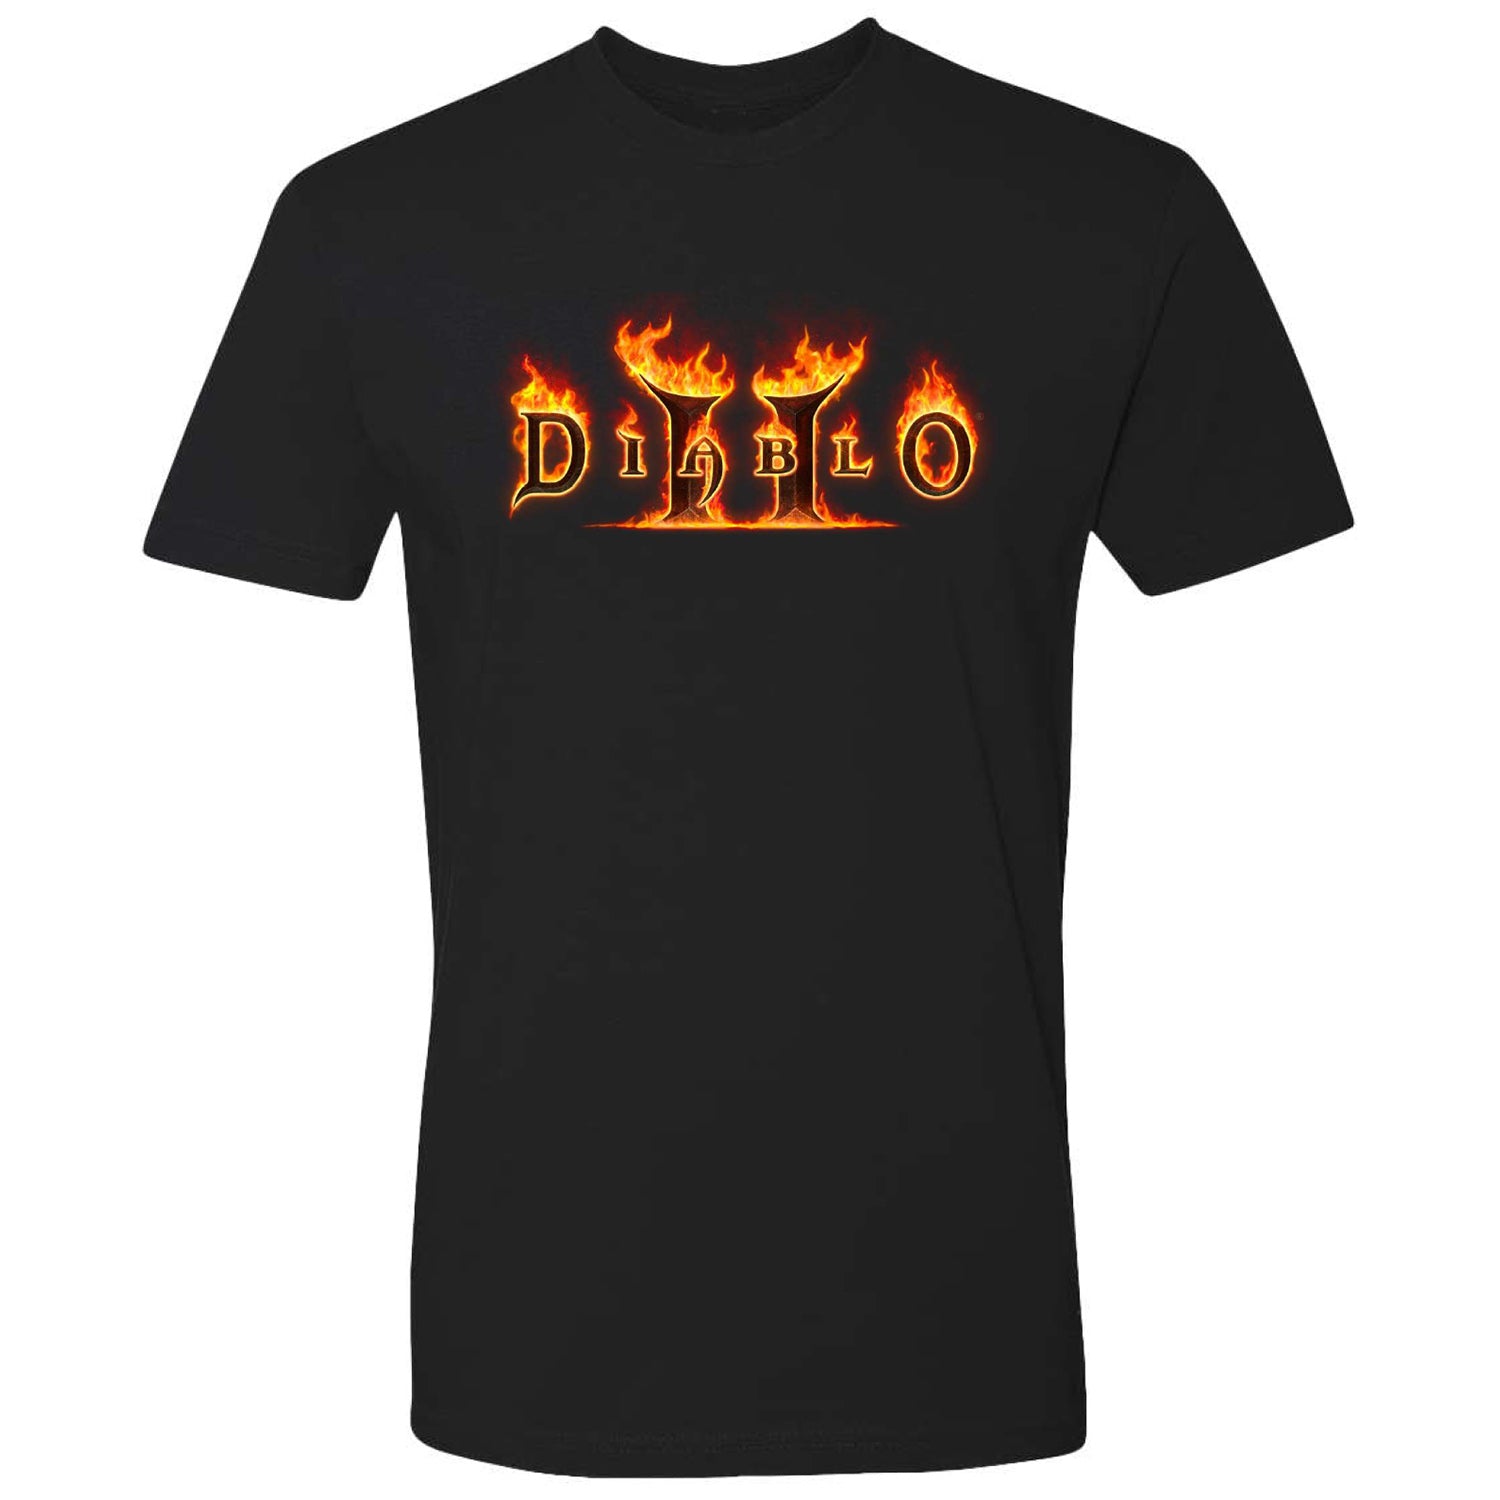 Diablo II Logo T-Shirt - Front View Black Version